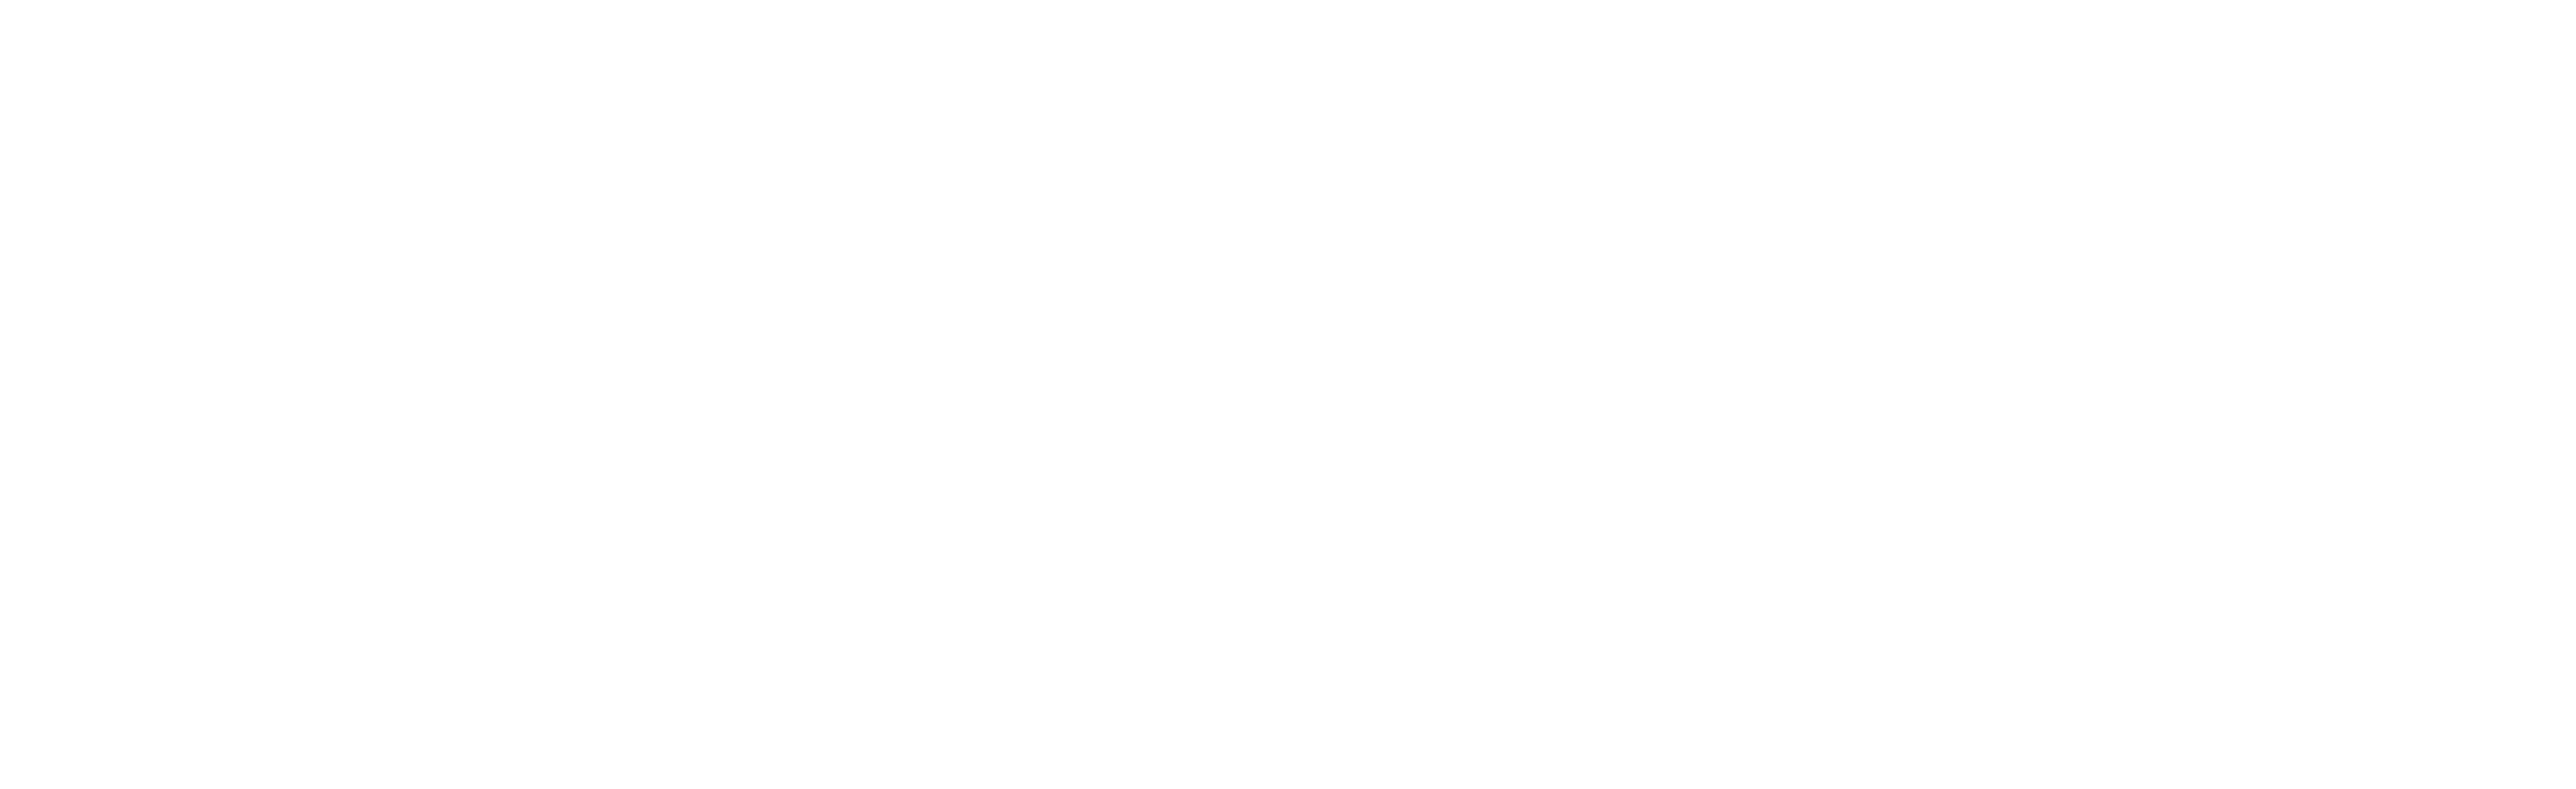 Logo image for Moreton Bay Region Industry and Tourism